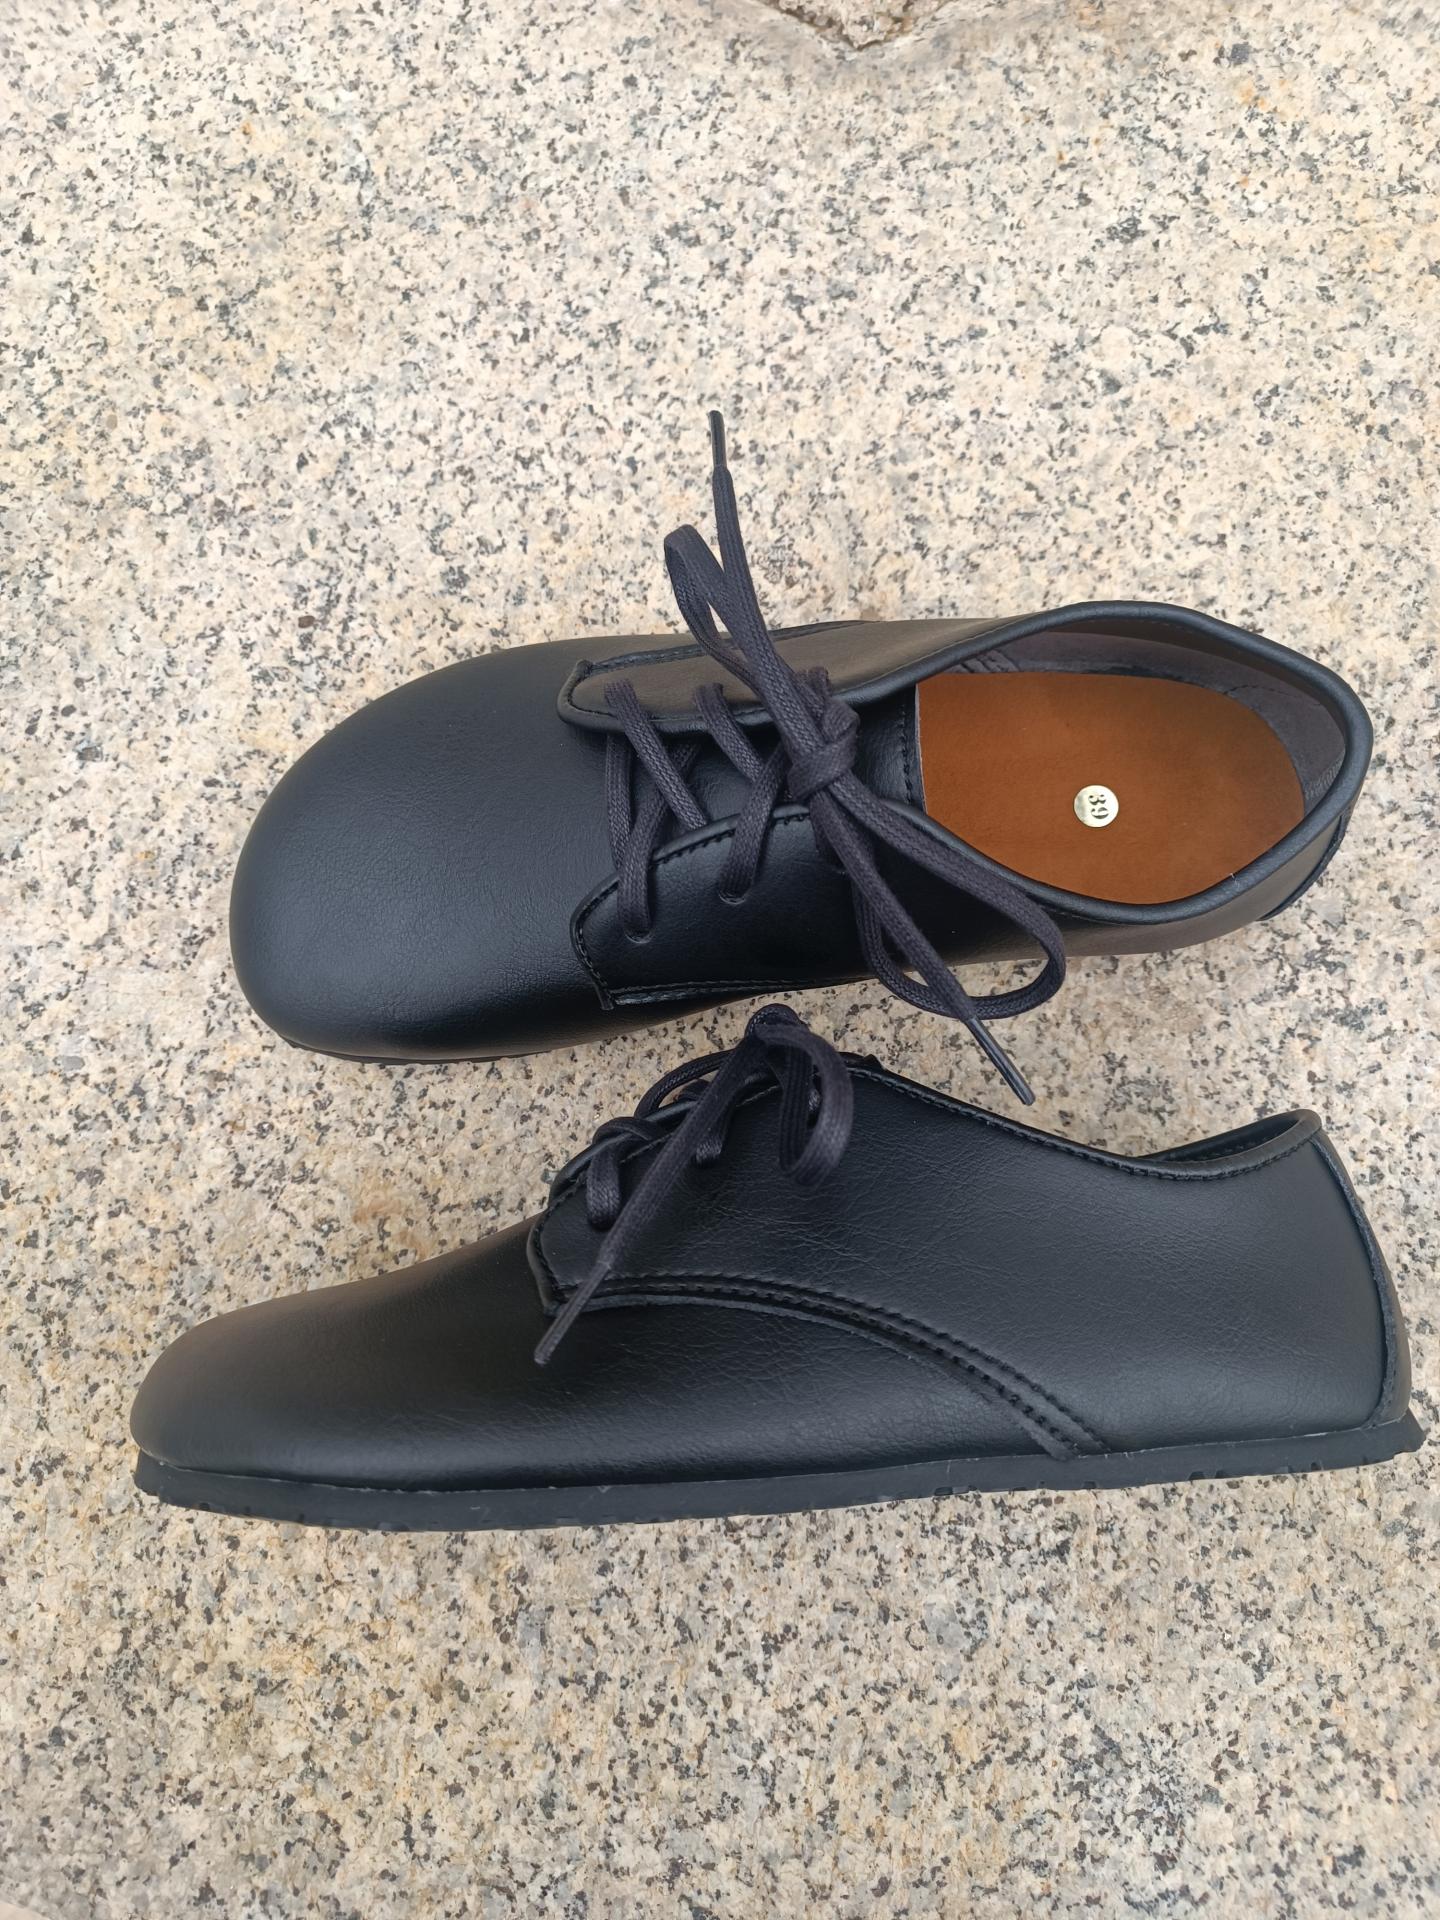 BAREFOOT AUSTIN color Negro, suelas Vibram SUPERNEWFLEX​ de 6mm de grosor,  zapatos Barefoot para mujer y hombre, calzado Barefoot, zapato veganos,  eco-friendly, barefoot.: 84,00 € - BIOWORLD SHOES